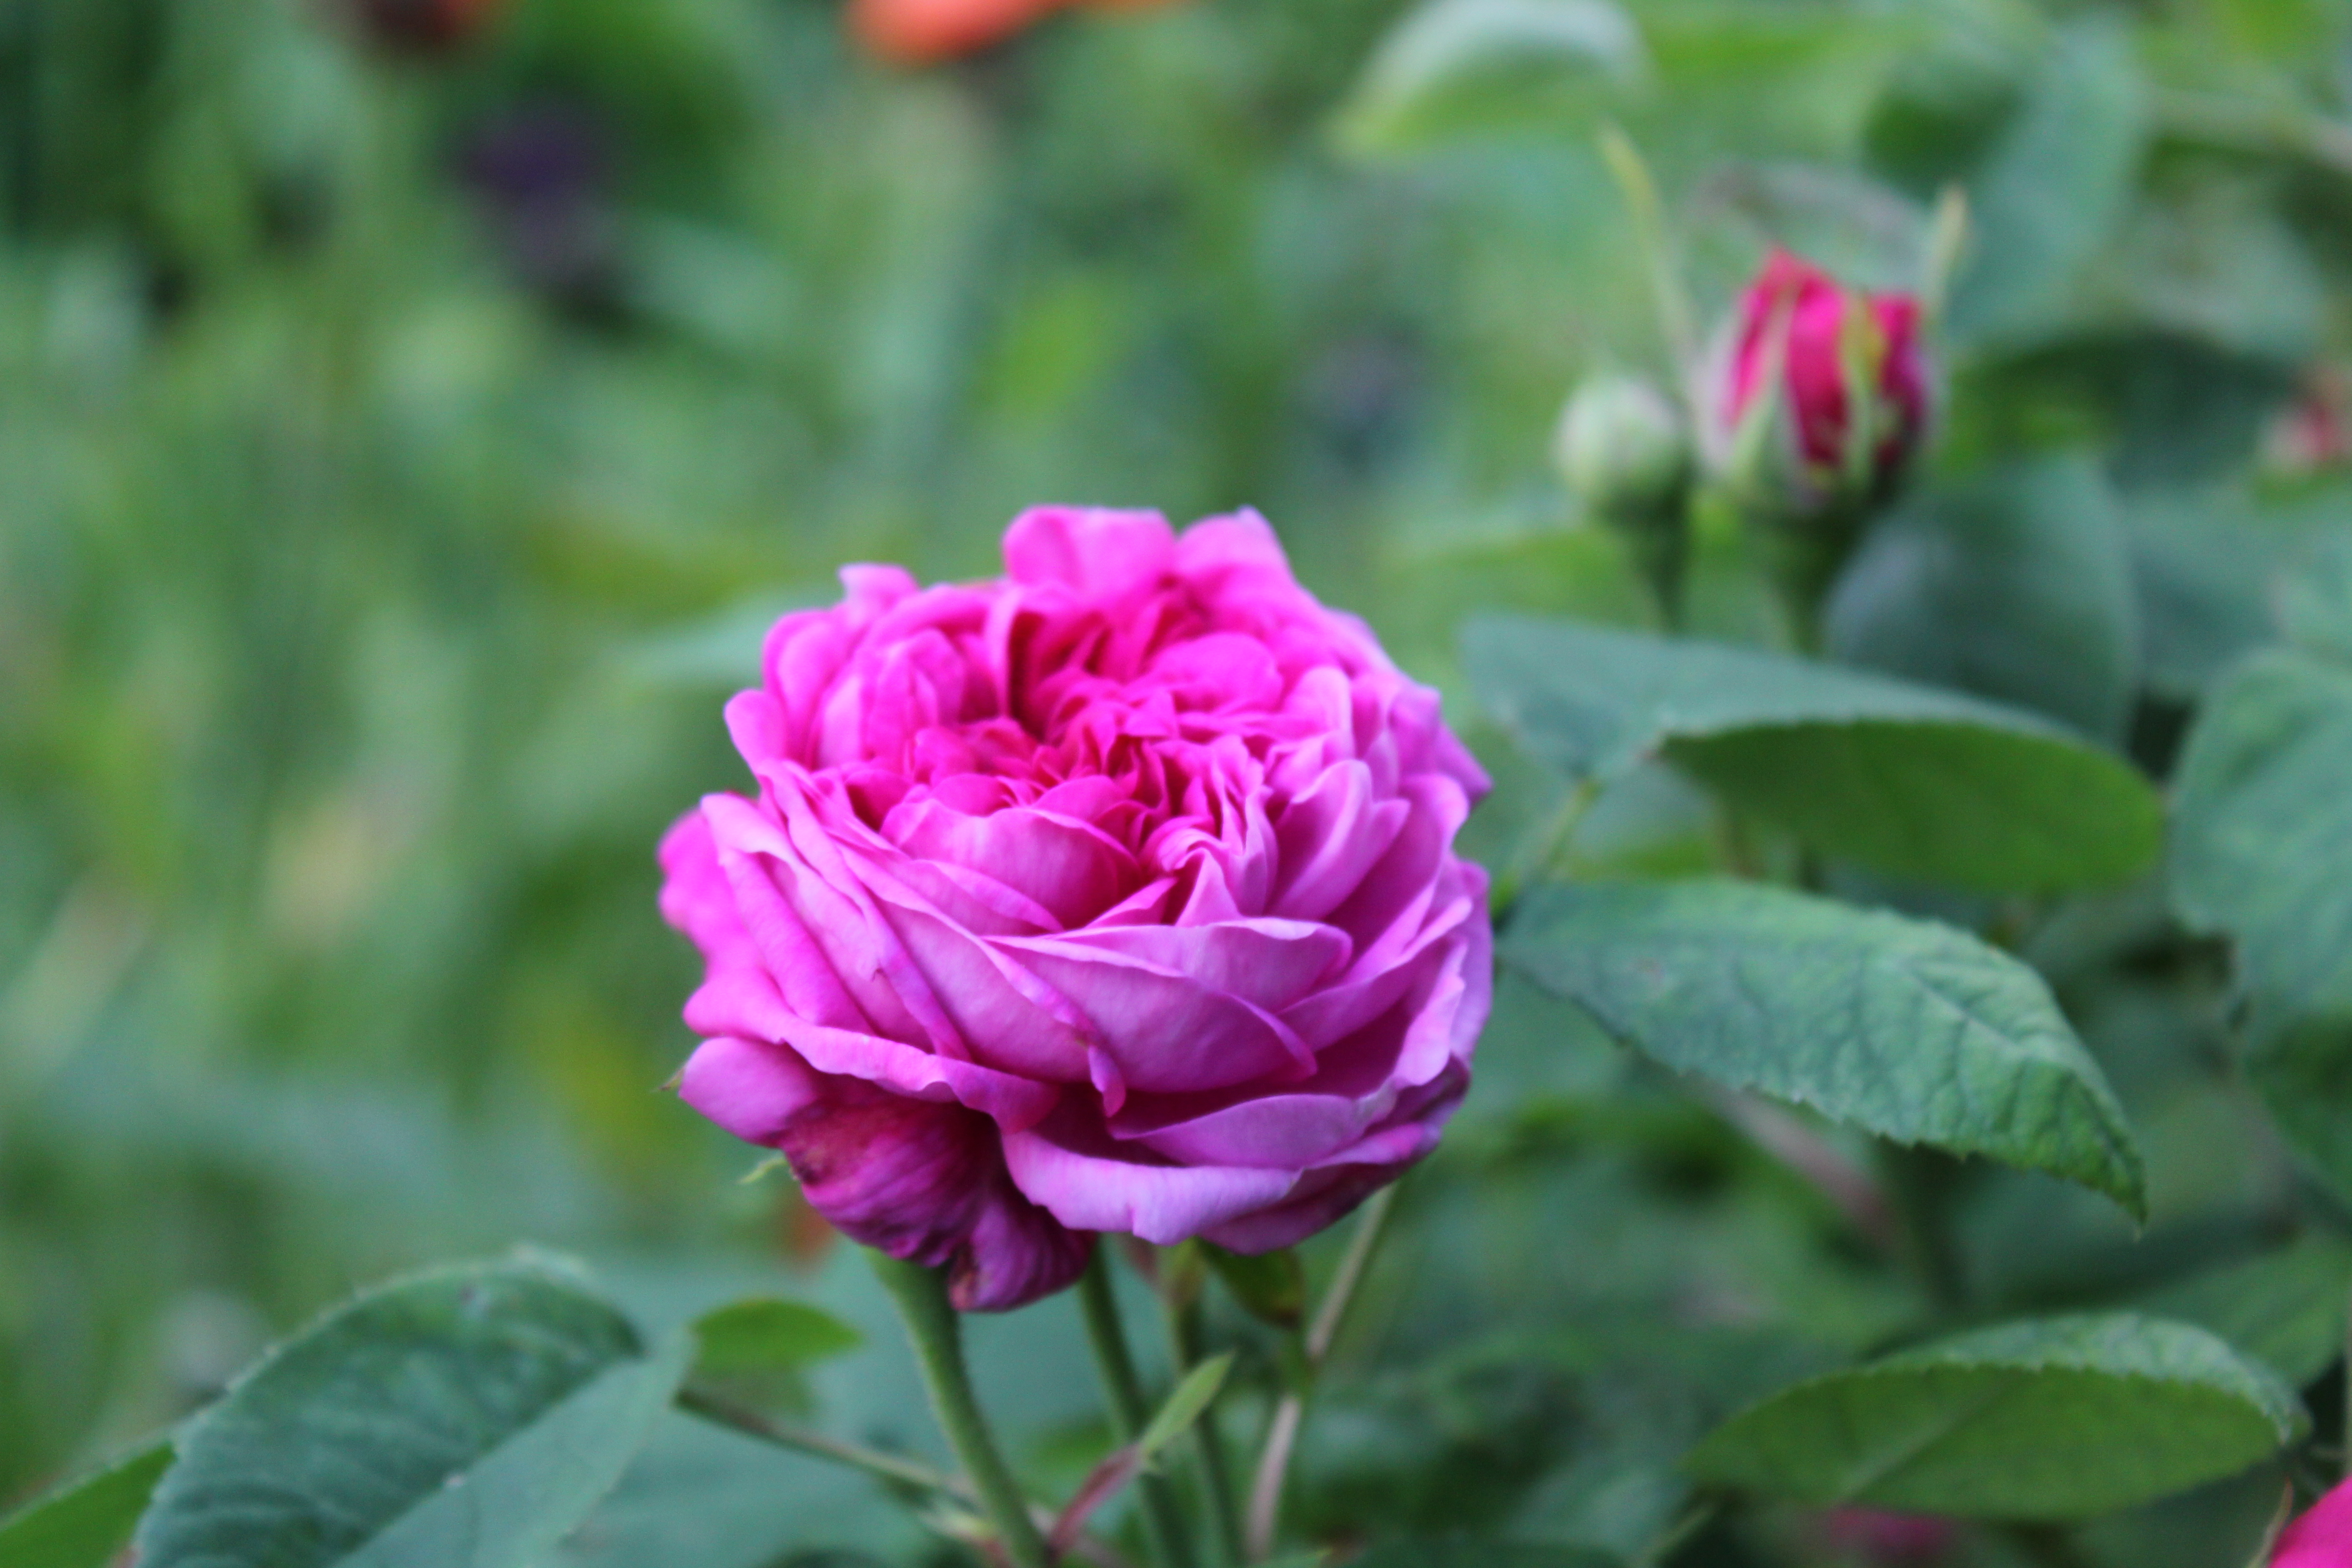 Pink rose flower - cc0.photo